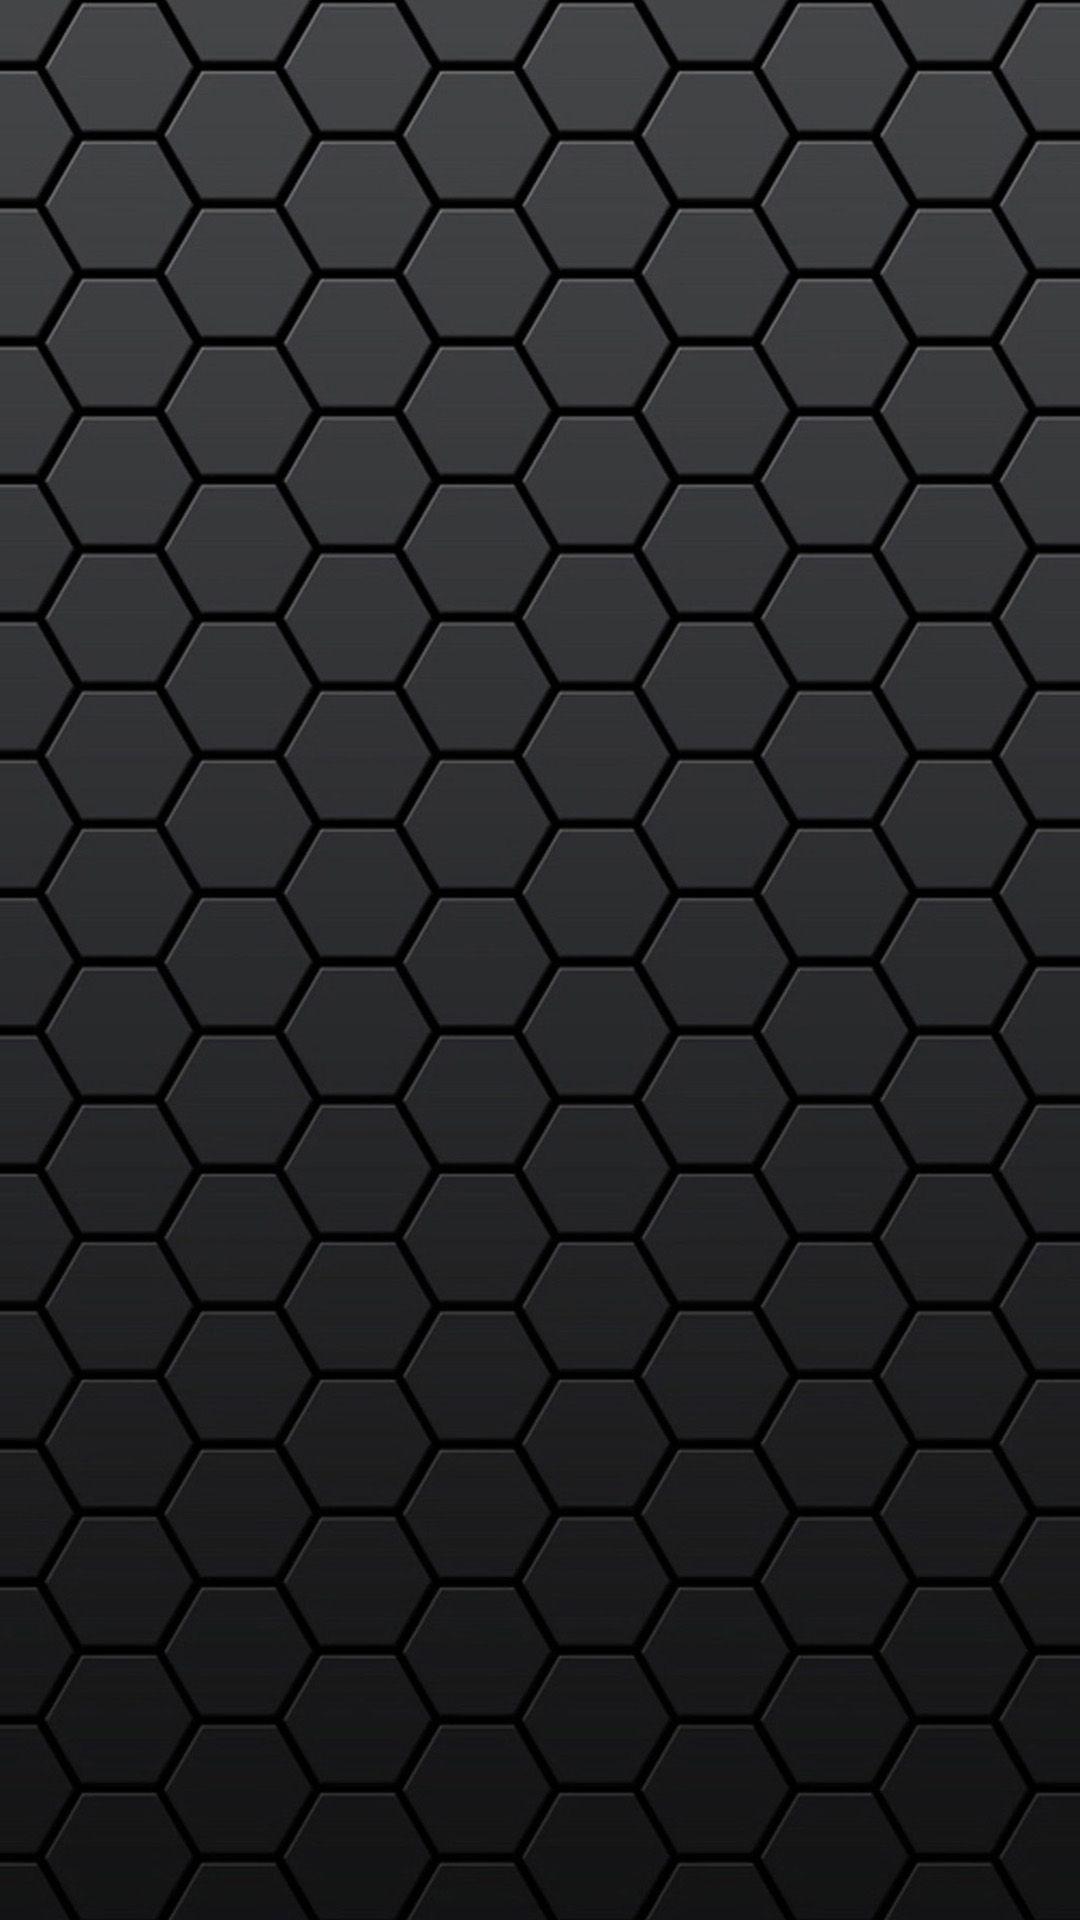 Batman Carbon Fiber iPhone Wallpaper 4K - iPhone Wallpapers